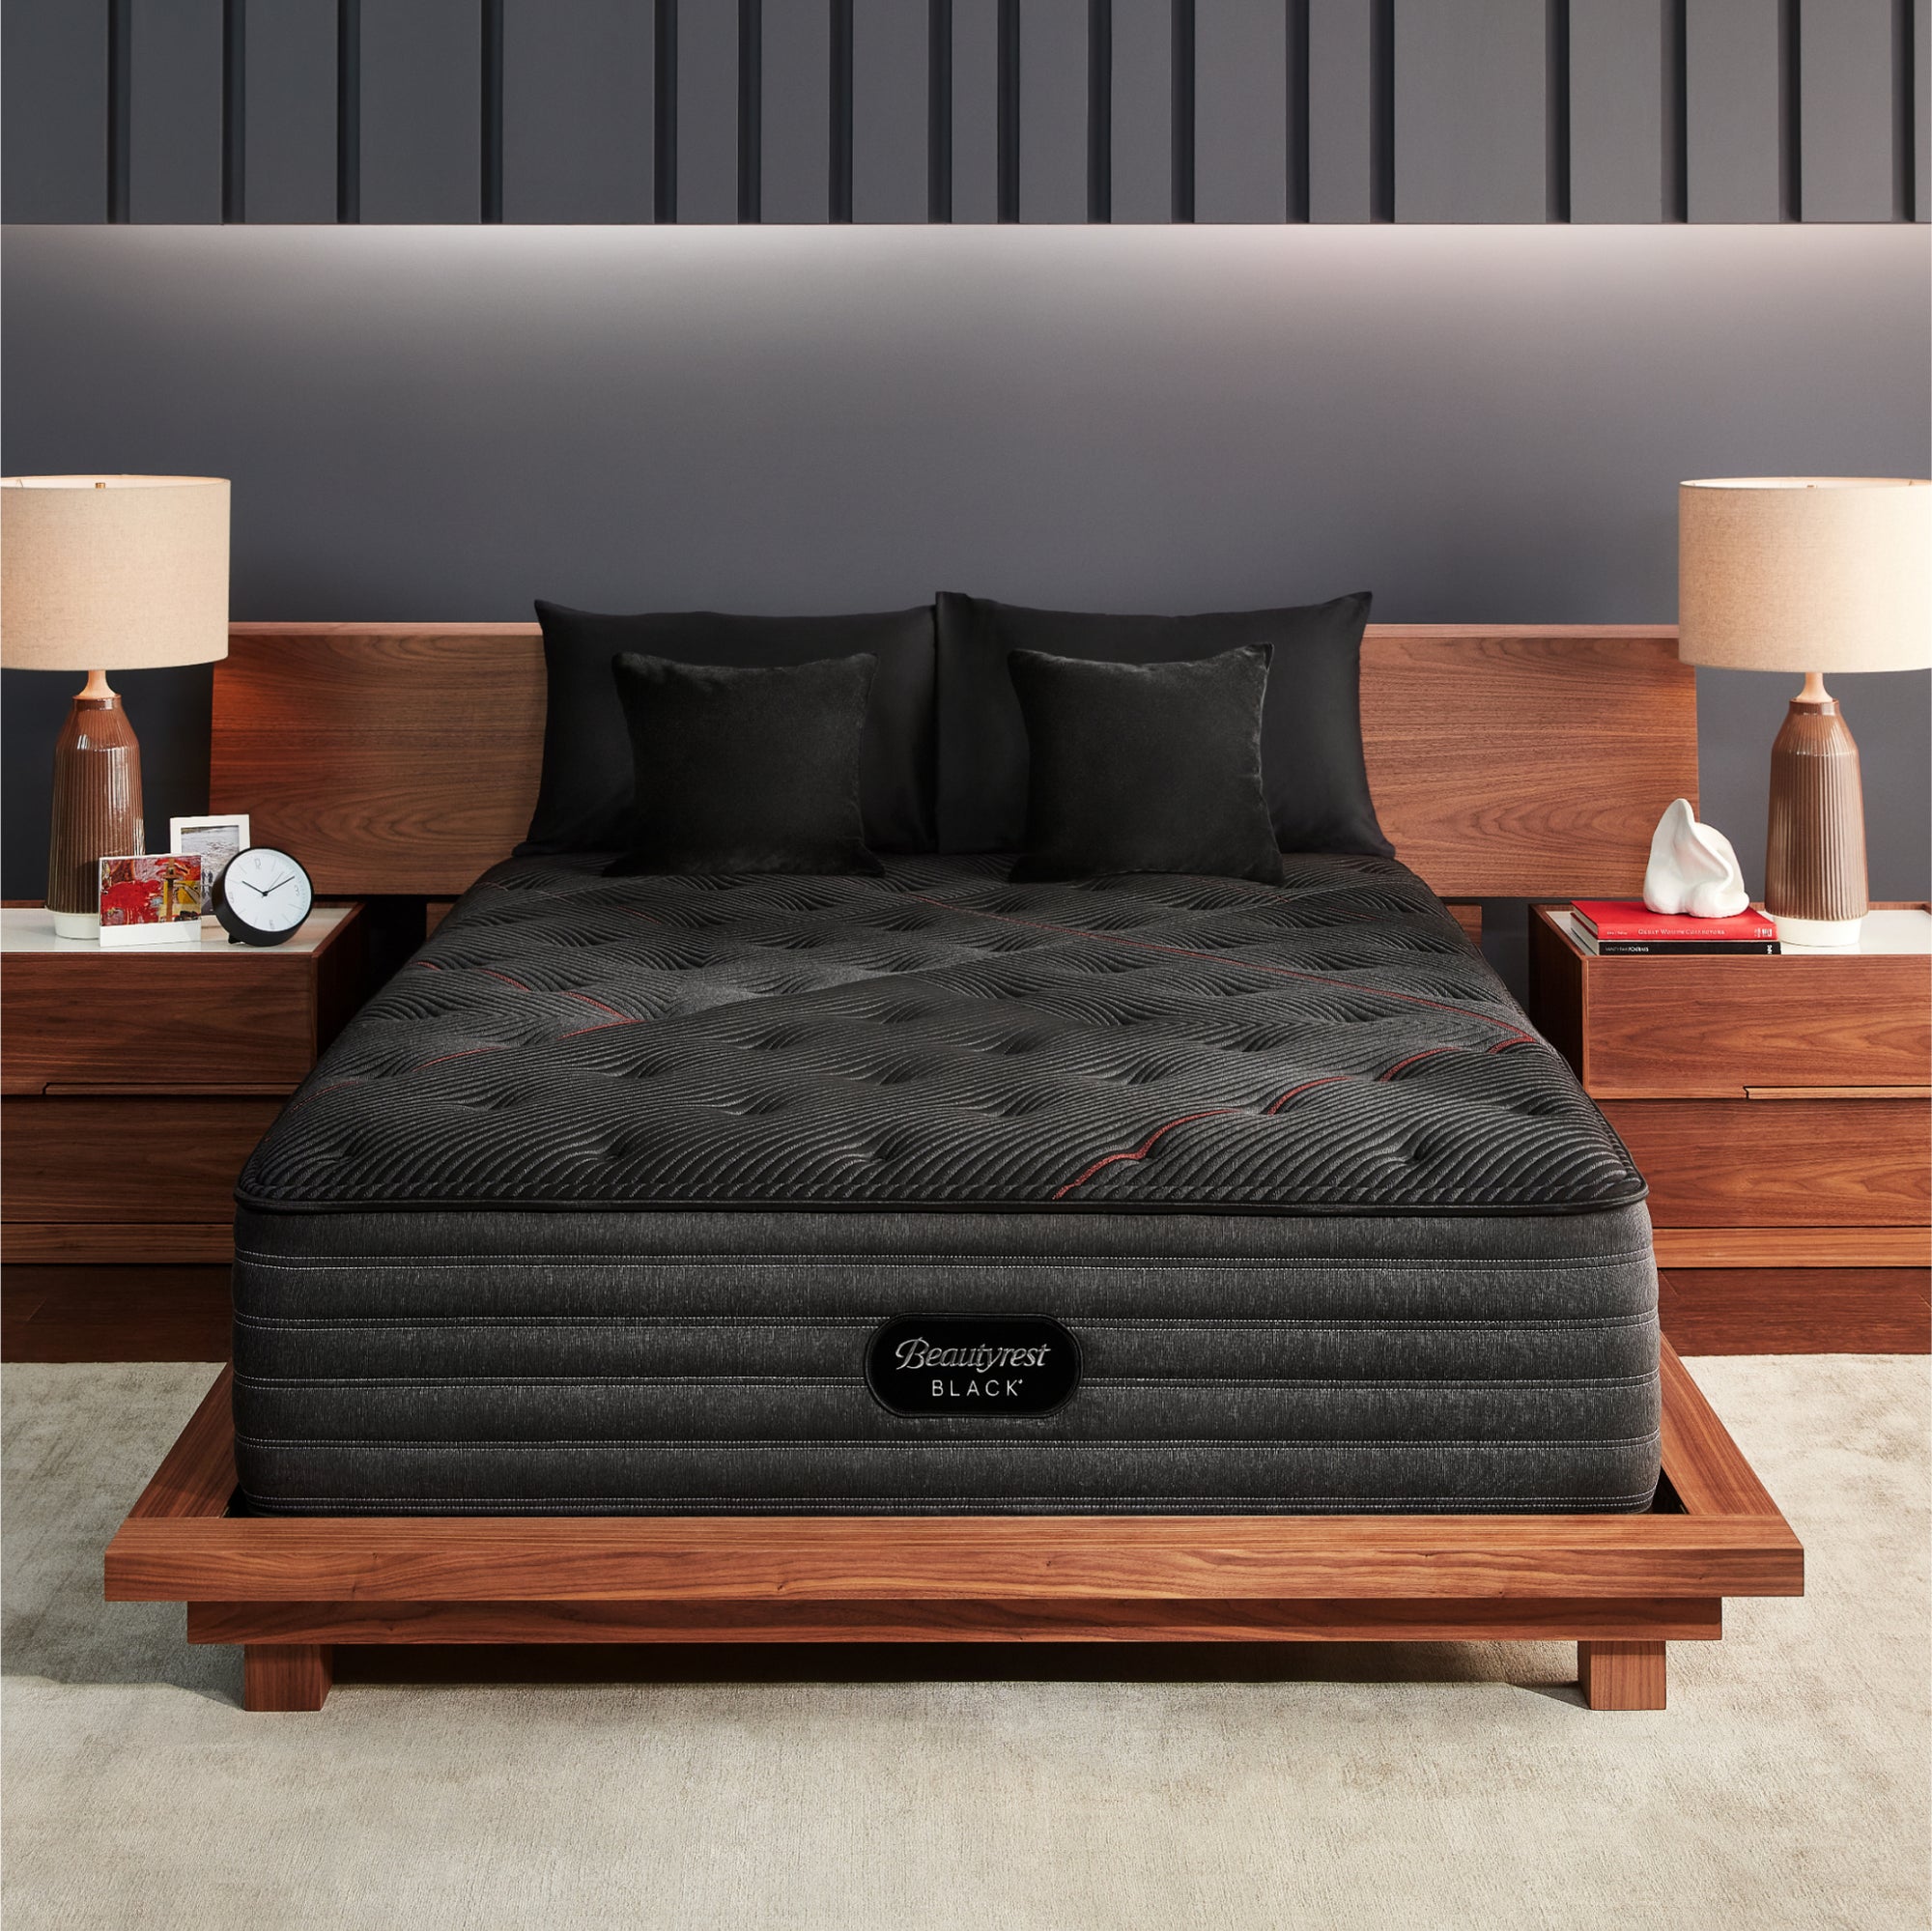 The Beautyrest Black deluxe c-class mattress in a bedroom ||series: deluxe c-class|| feel: plush